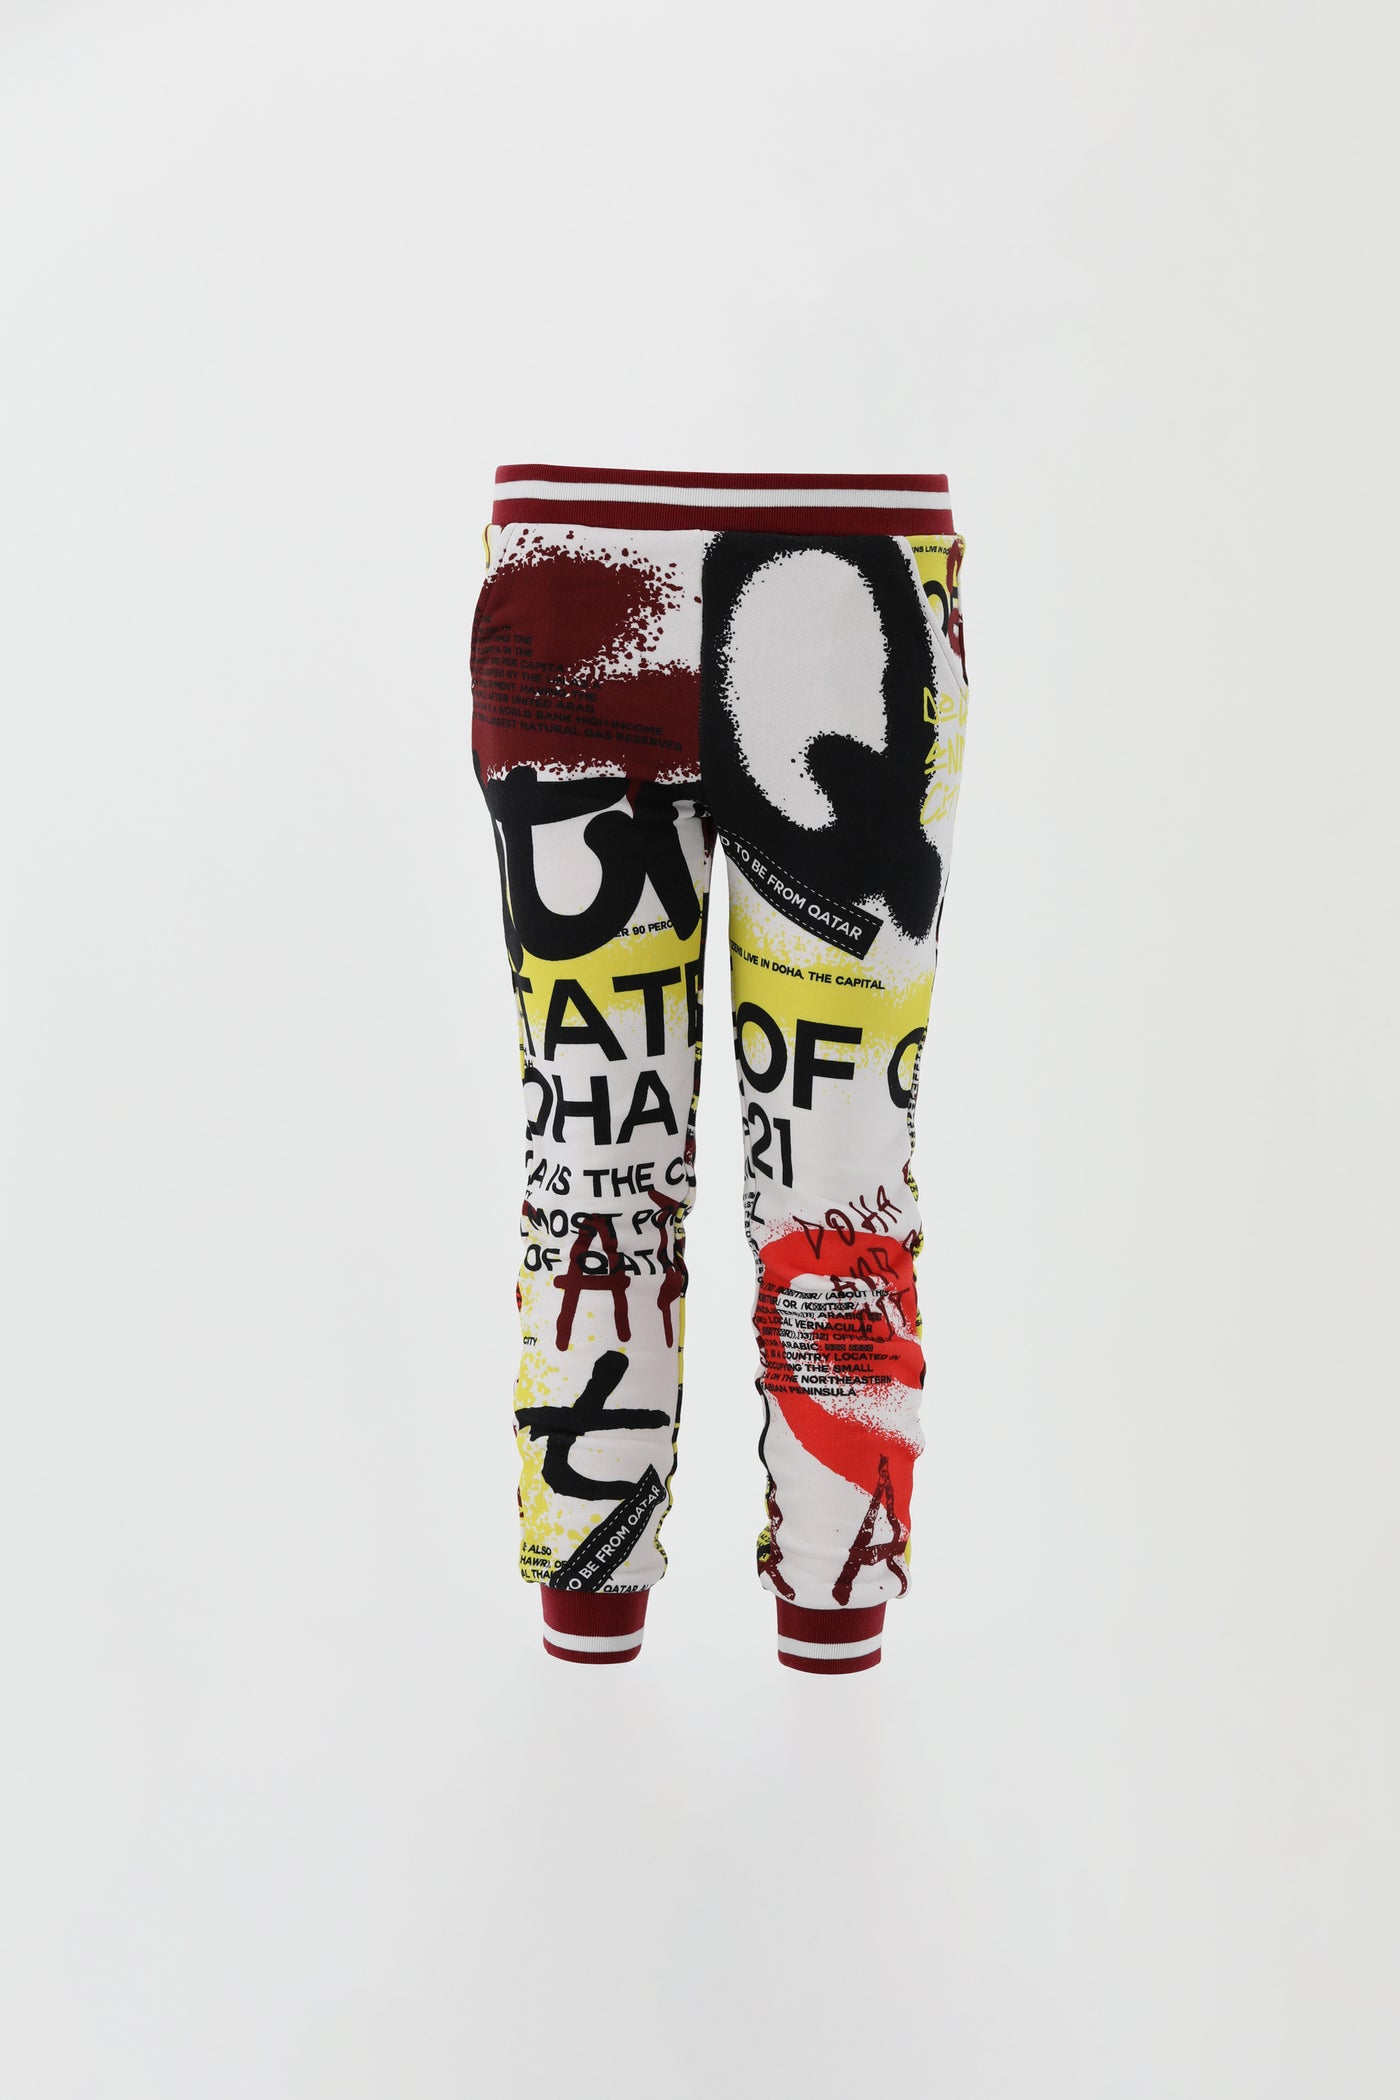 QTR graffiti print pants21KB-022